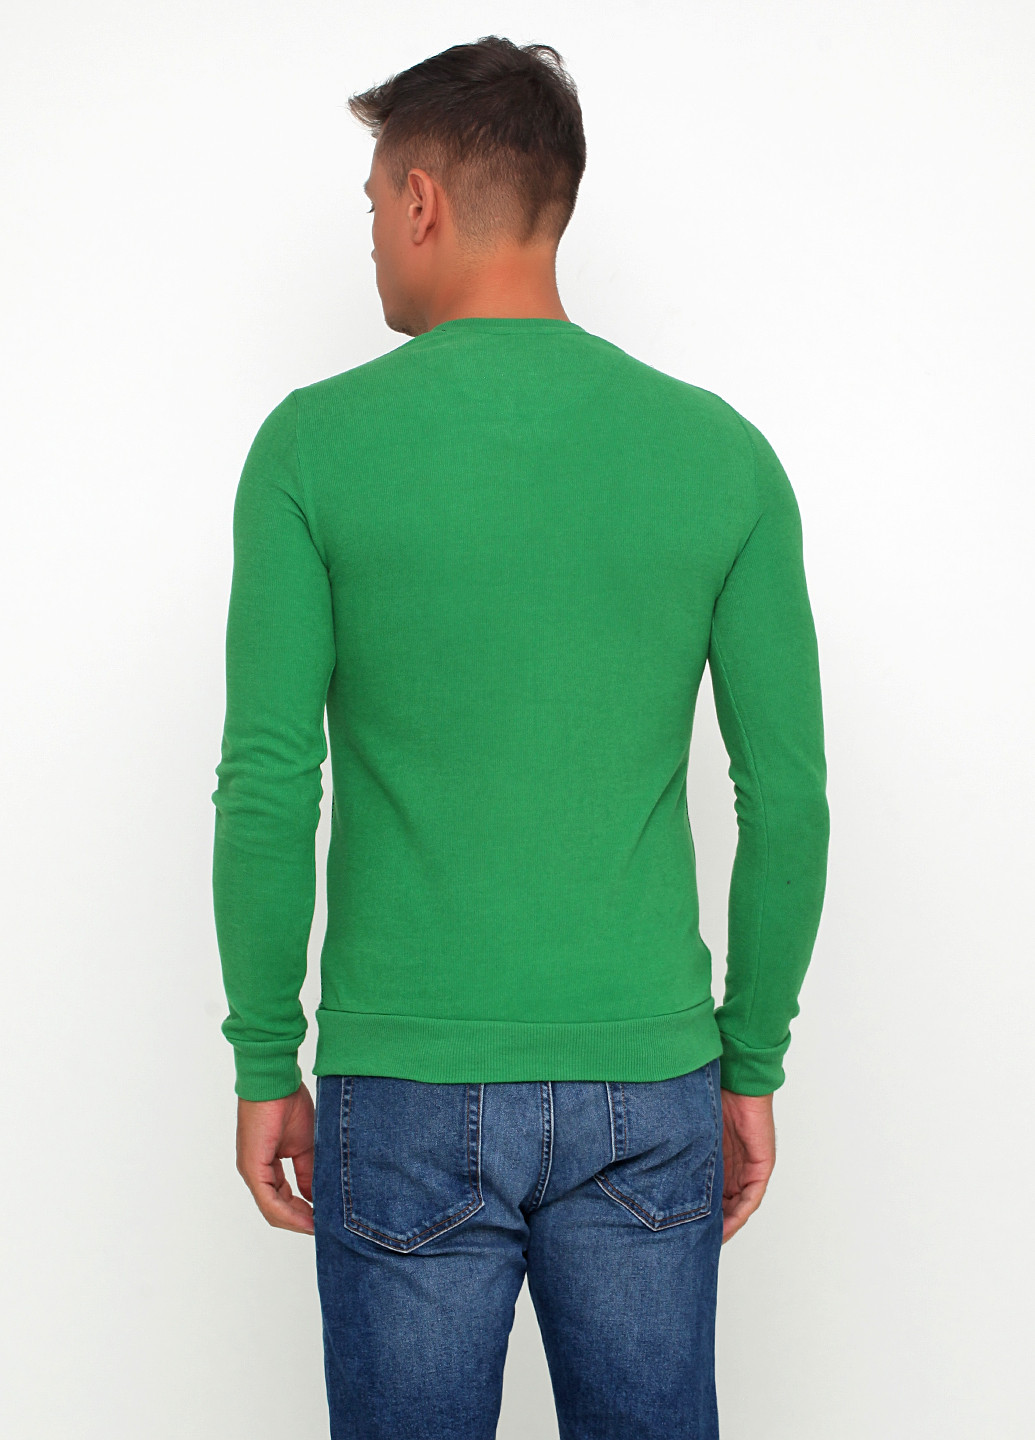 Зеленый демисезонный пуловер пуловер DKM